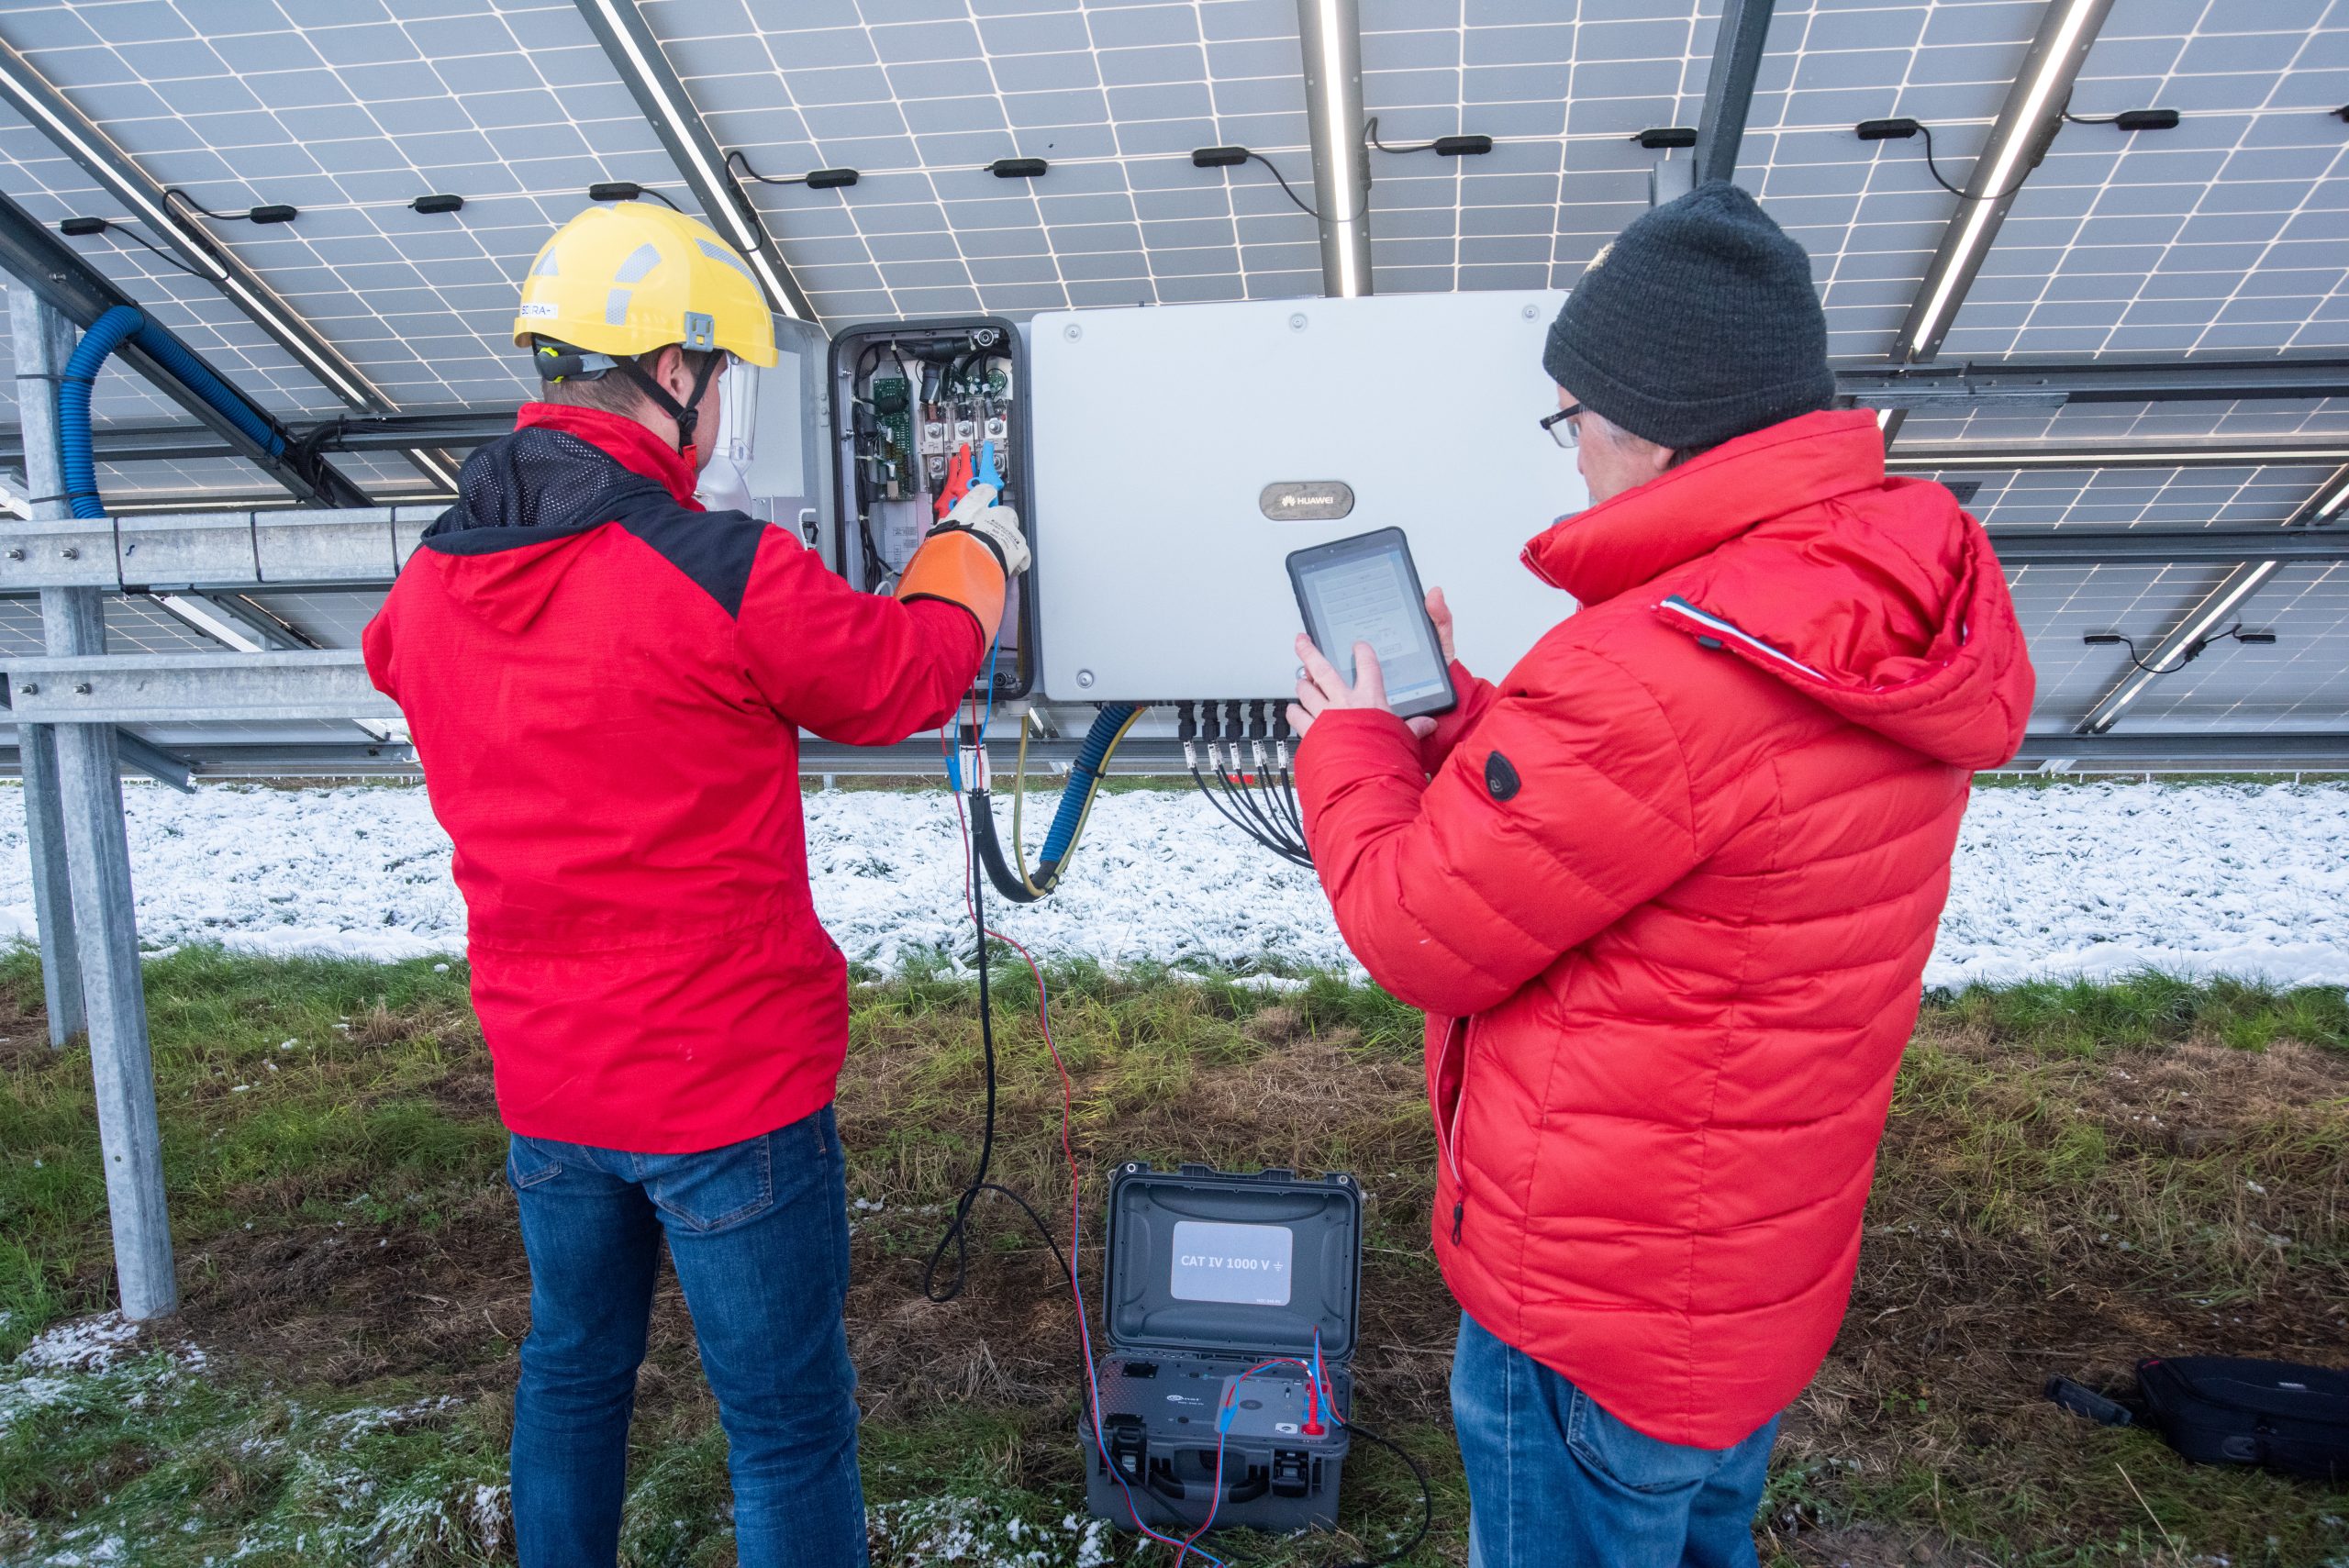 Taking measurements using the Sonel MZC-340-PV meter on a solar power farm inverter